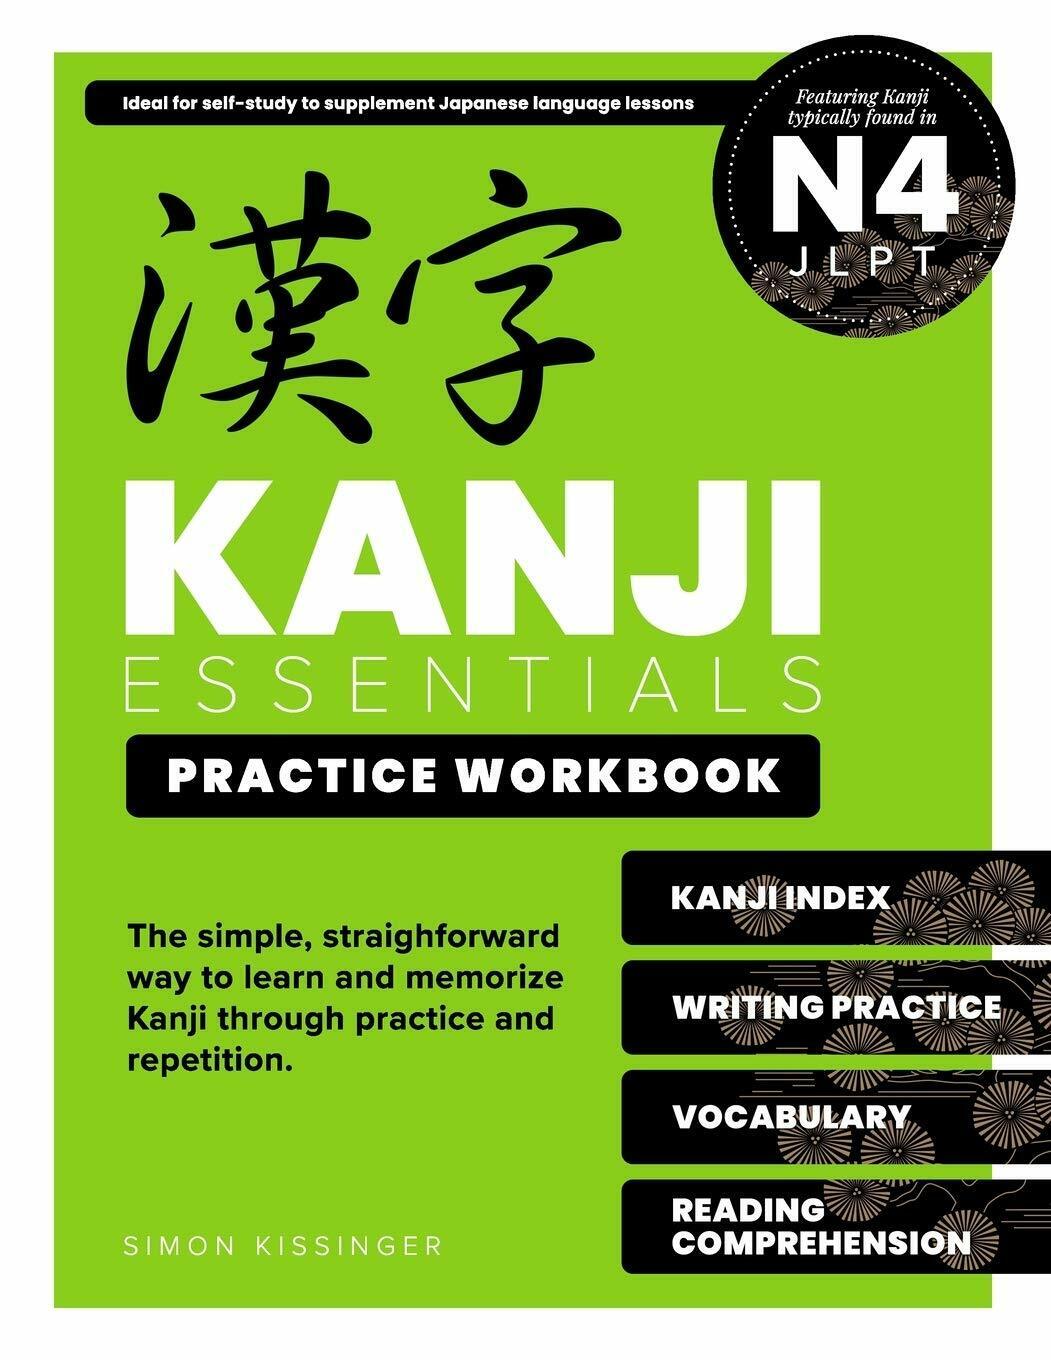 Kanji Essentials Practice Workbook Jlpt N4 di Simon Kissinger,  2020,  Indipende